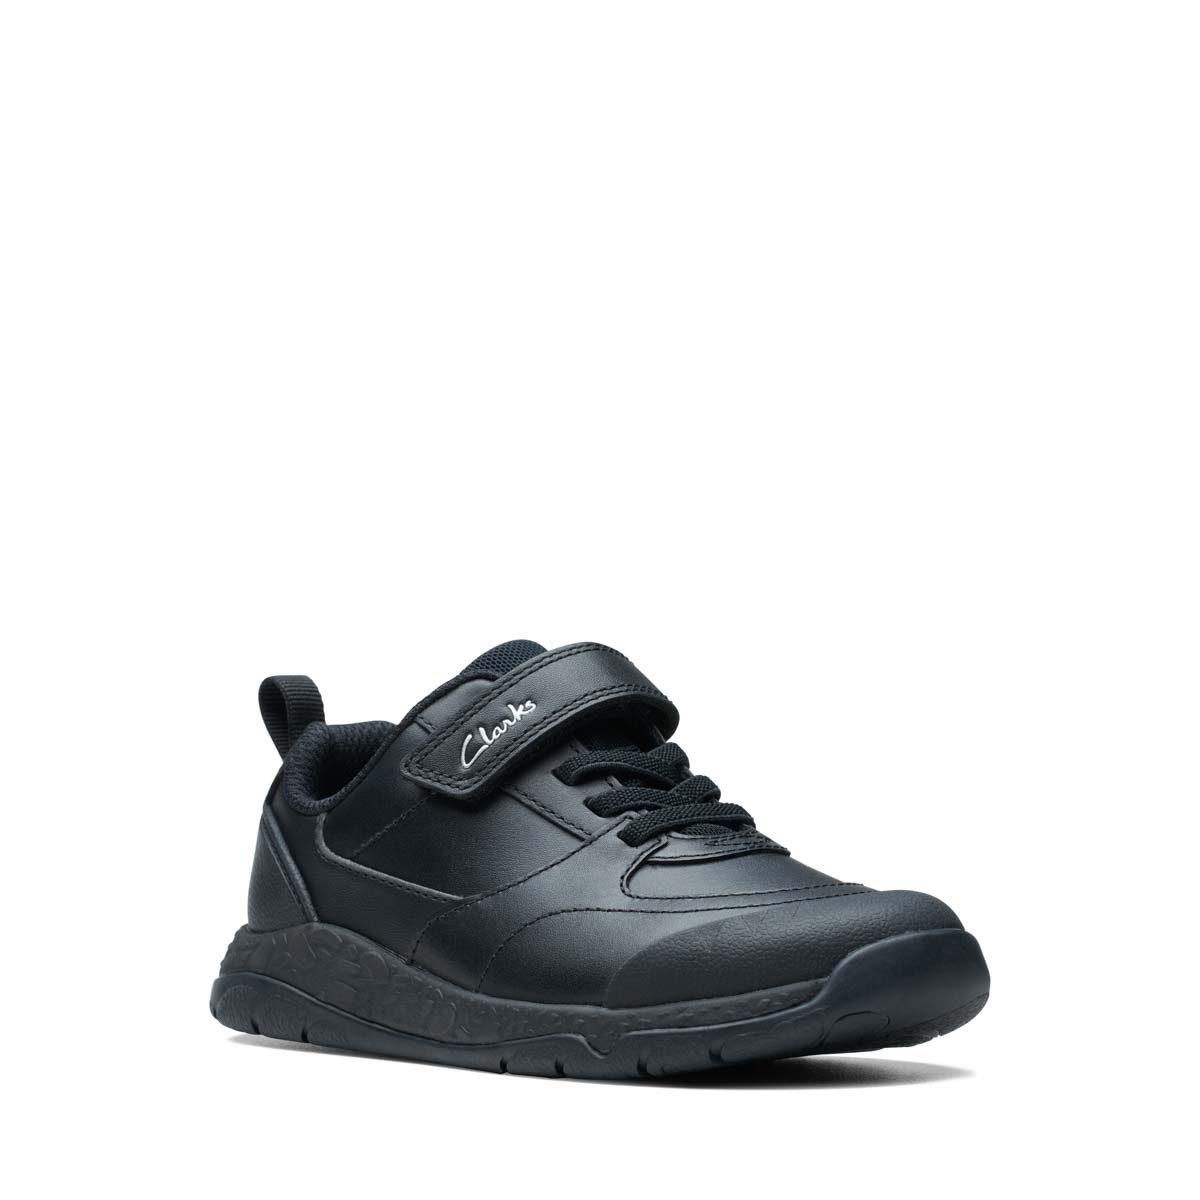 Clarks Steggy Stride K Black Leather Kids Boys Shoes 751406F In Size 1.5 In Plain Black Leather F Width Fitting Regular Fit For School For kids